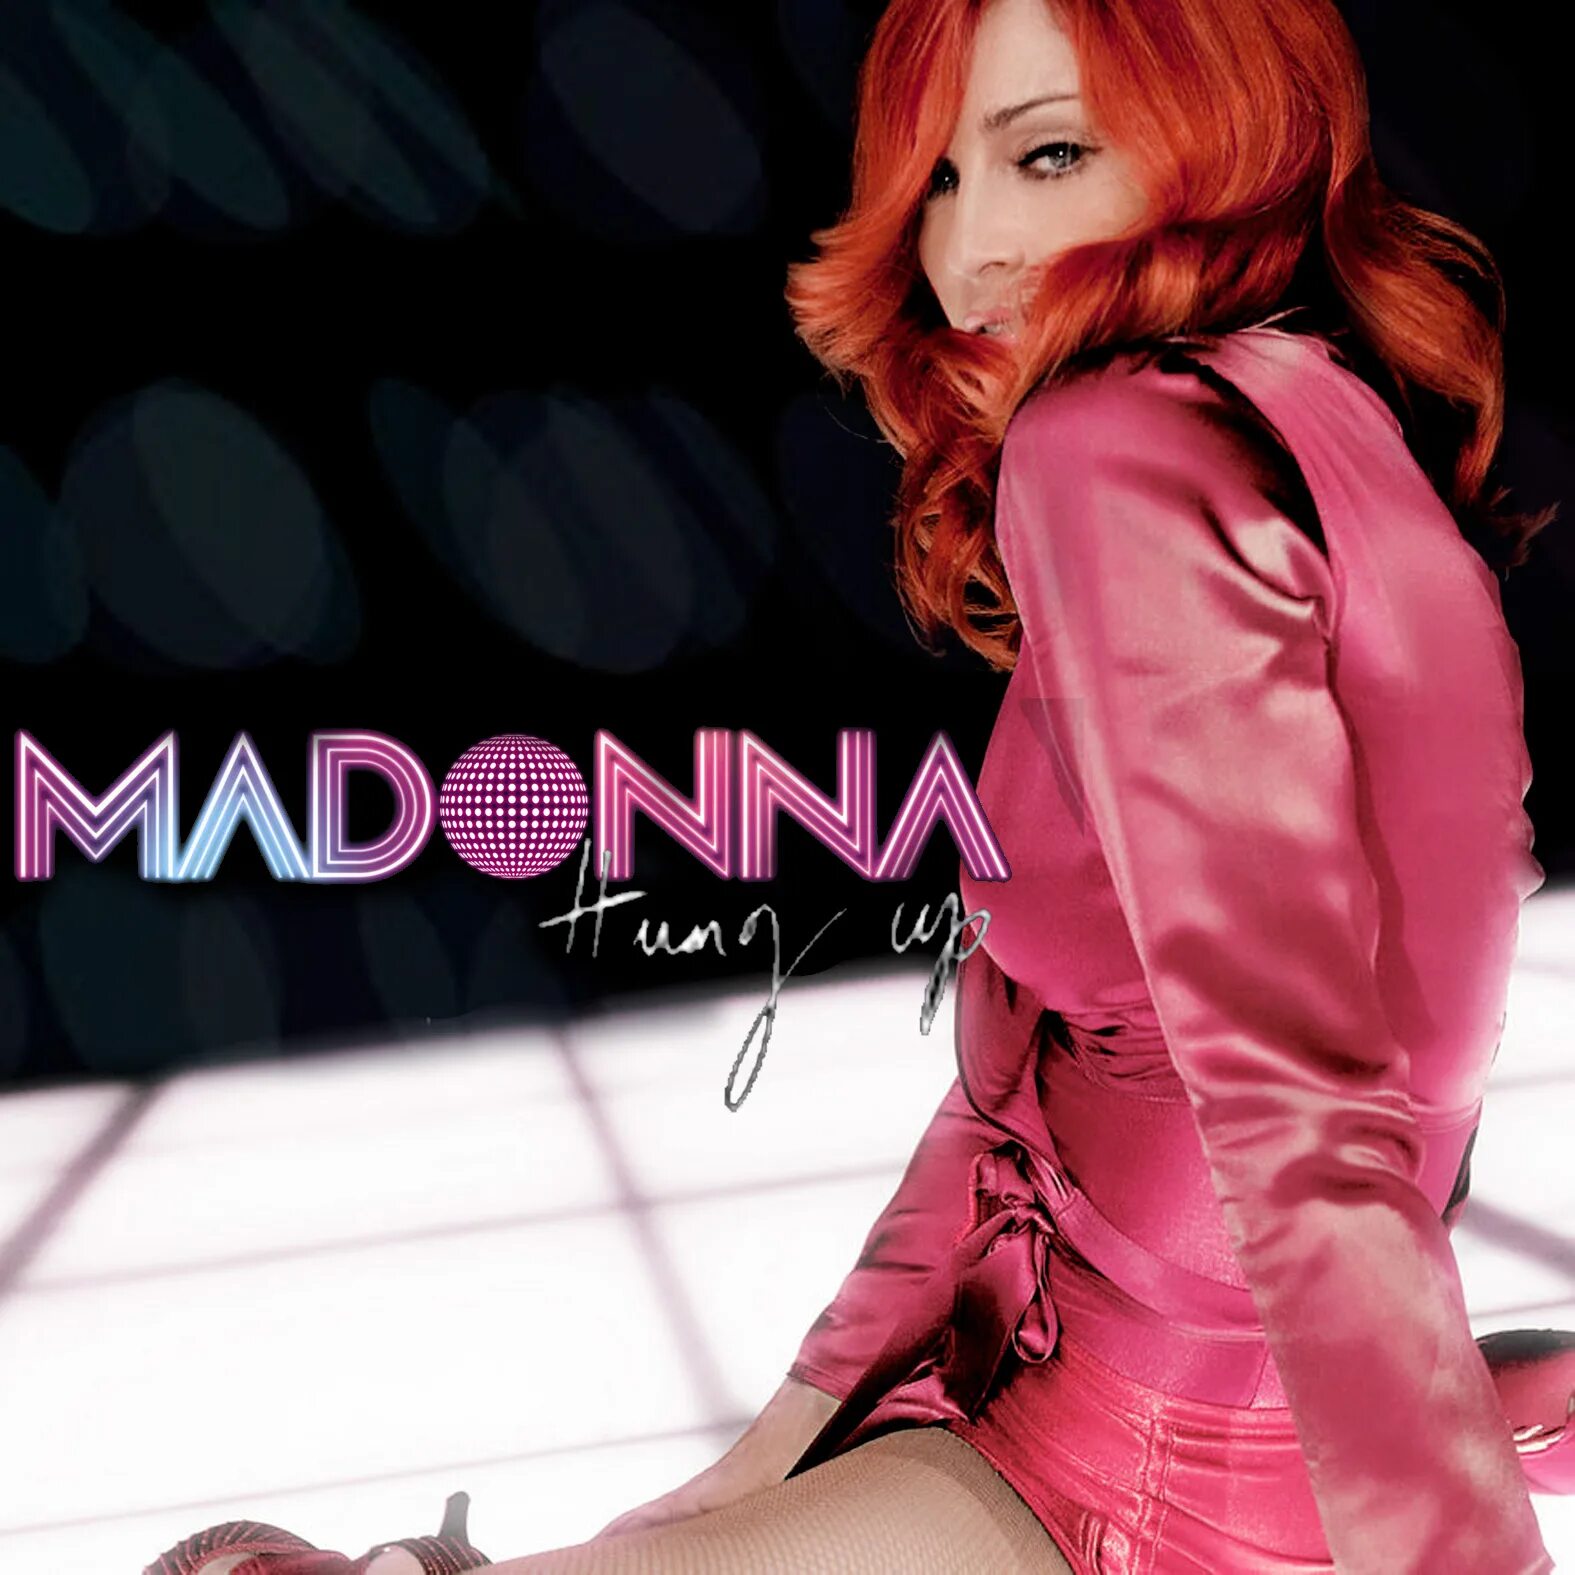 Up remix mp3. Мадонна Ханг ап. Мадонна hung up. Madonna hung up 2005. Madonna hung up обложка.